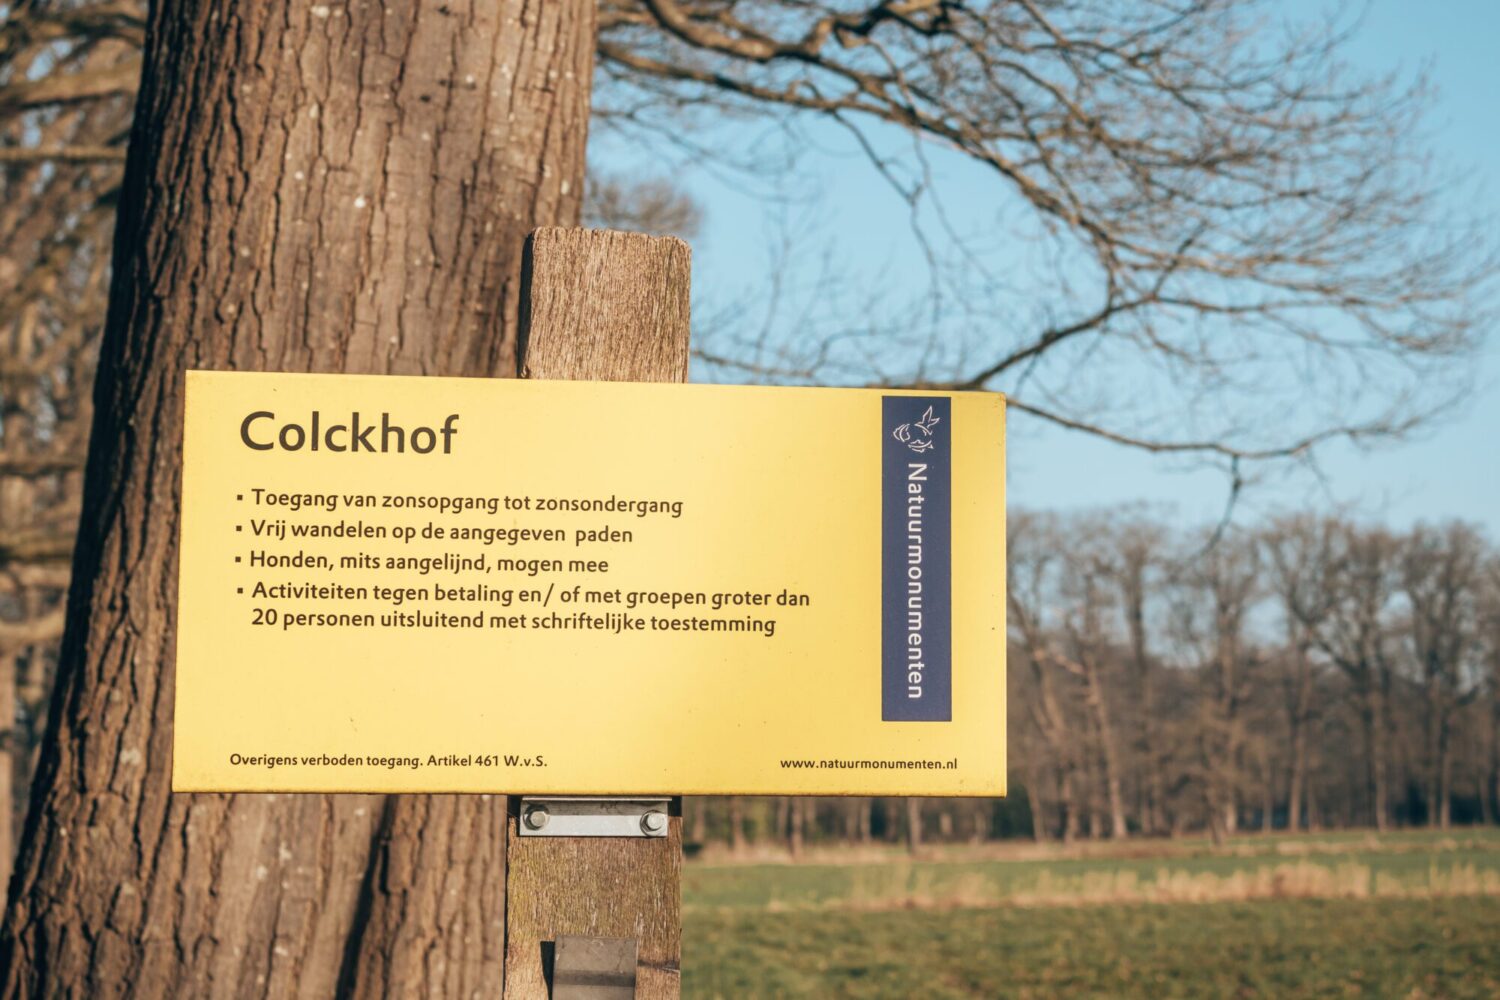 Colckhof